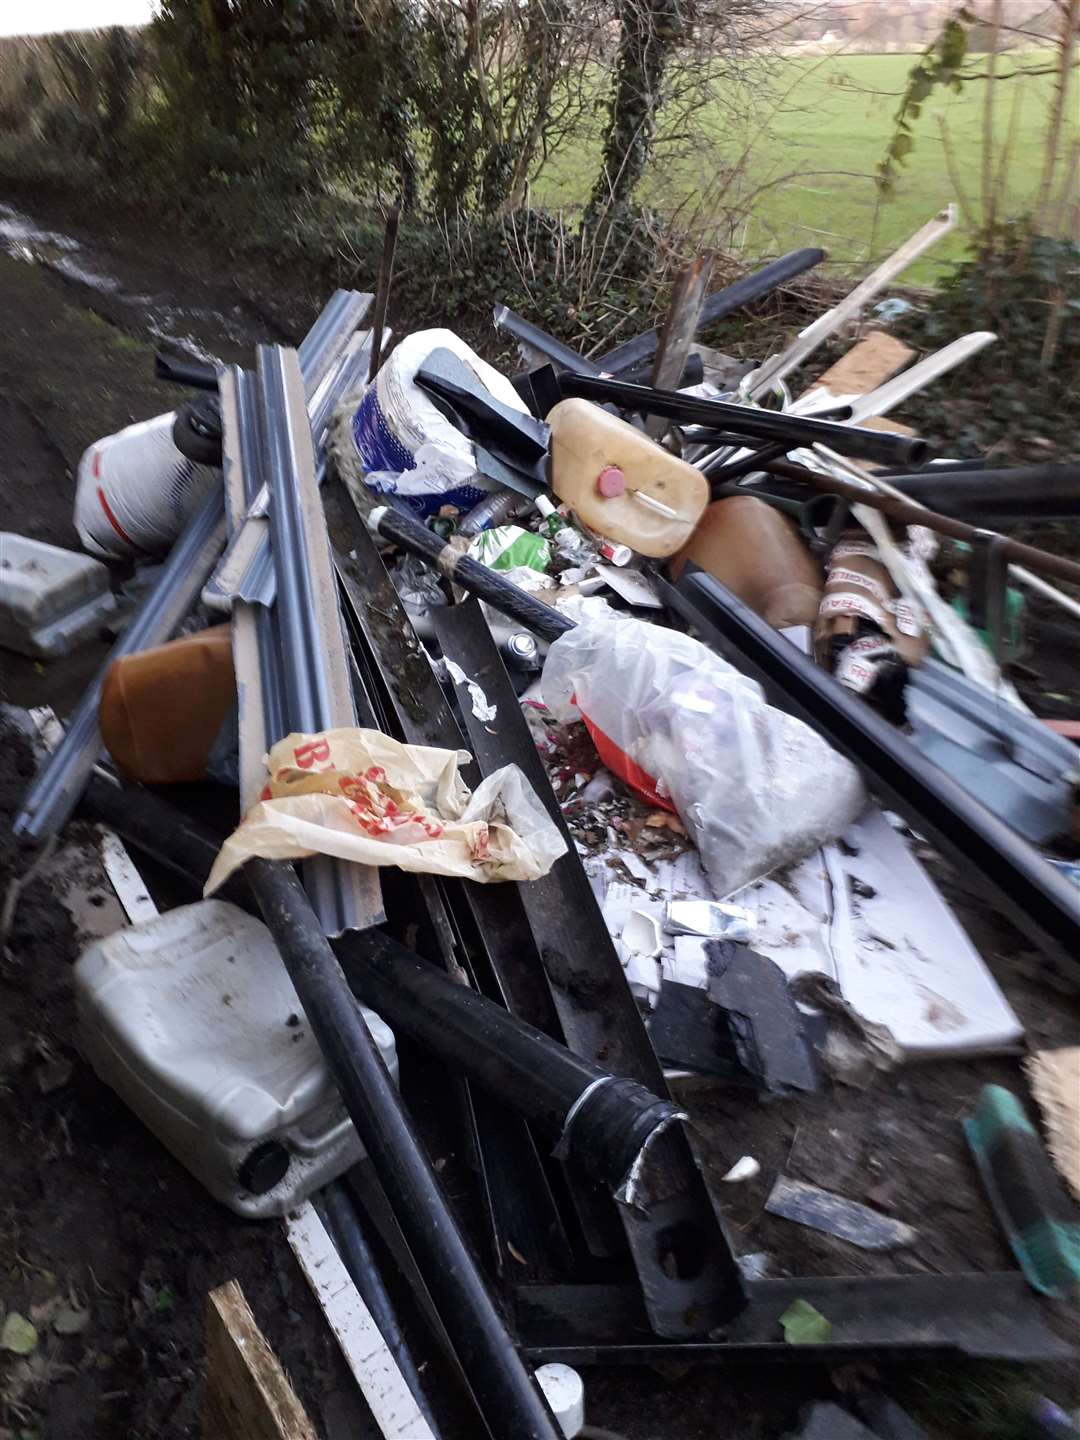 Daniel Murphy dumped 1.75 tonnes of rubbish in Ashford